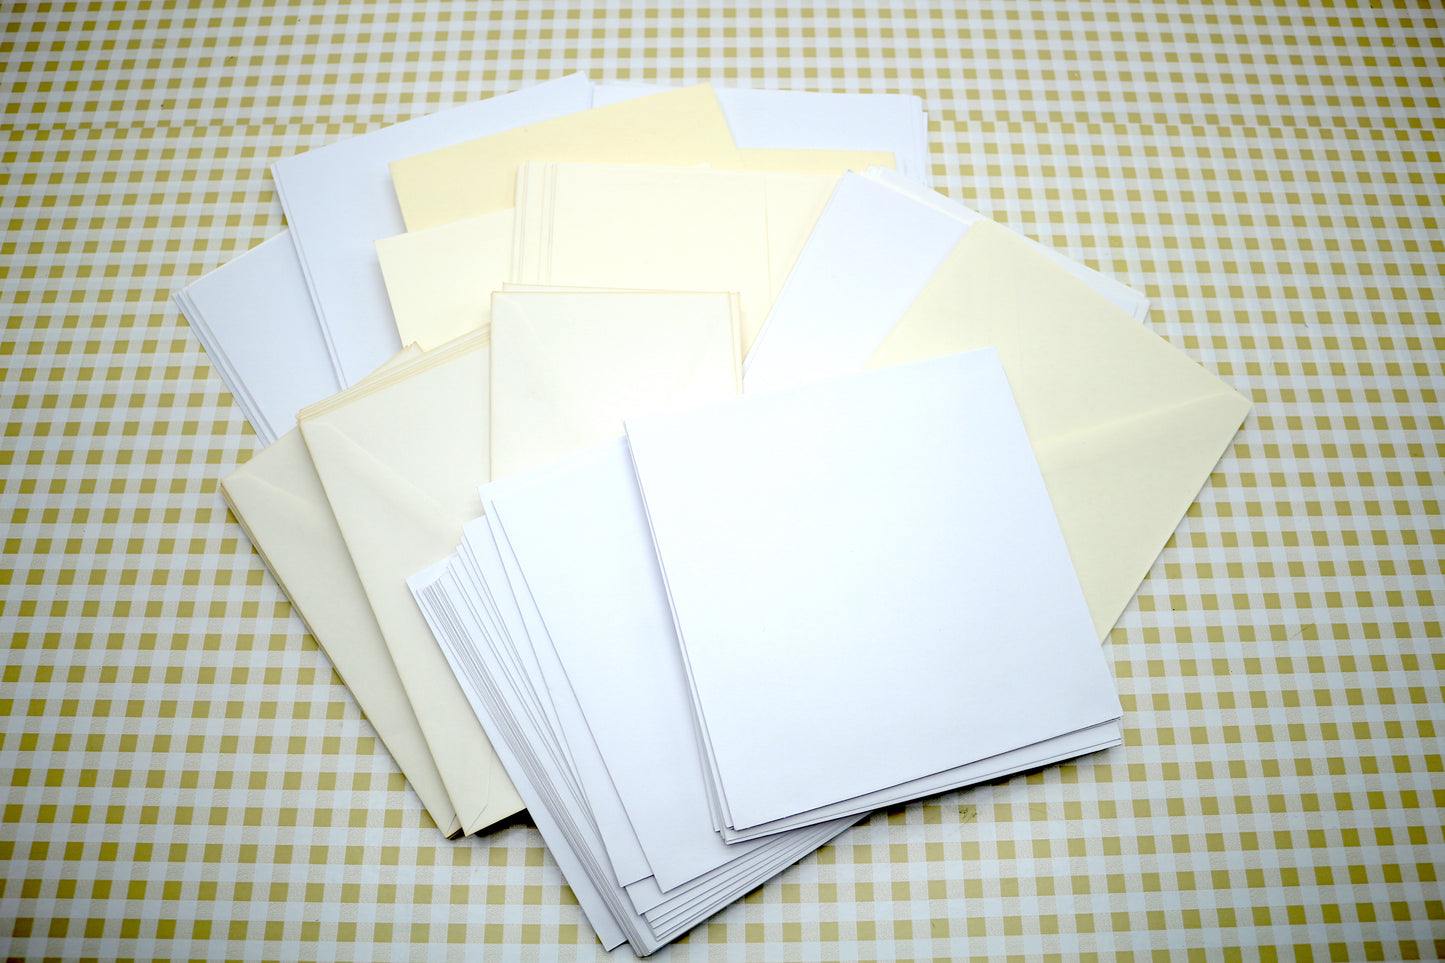 1 pound White Envelopes Variety of Sizes, Money Envelopes, Scrapbooking, Junk Journal Supplies